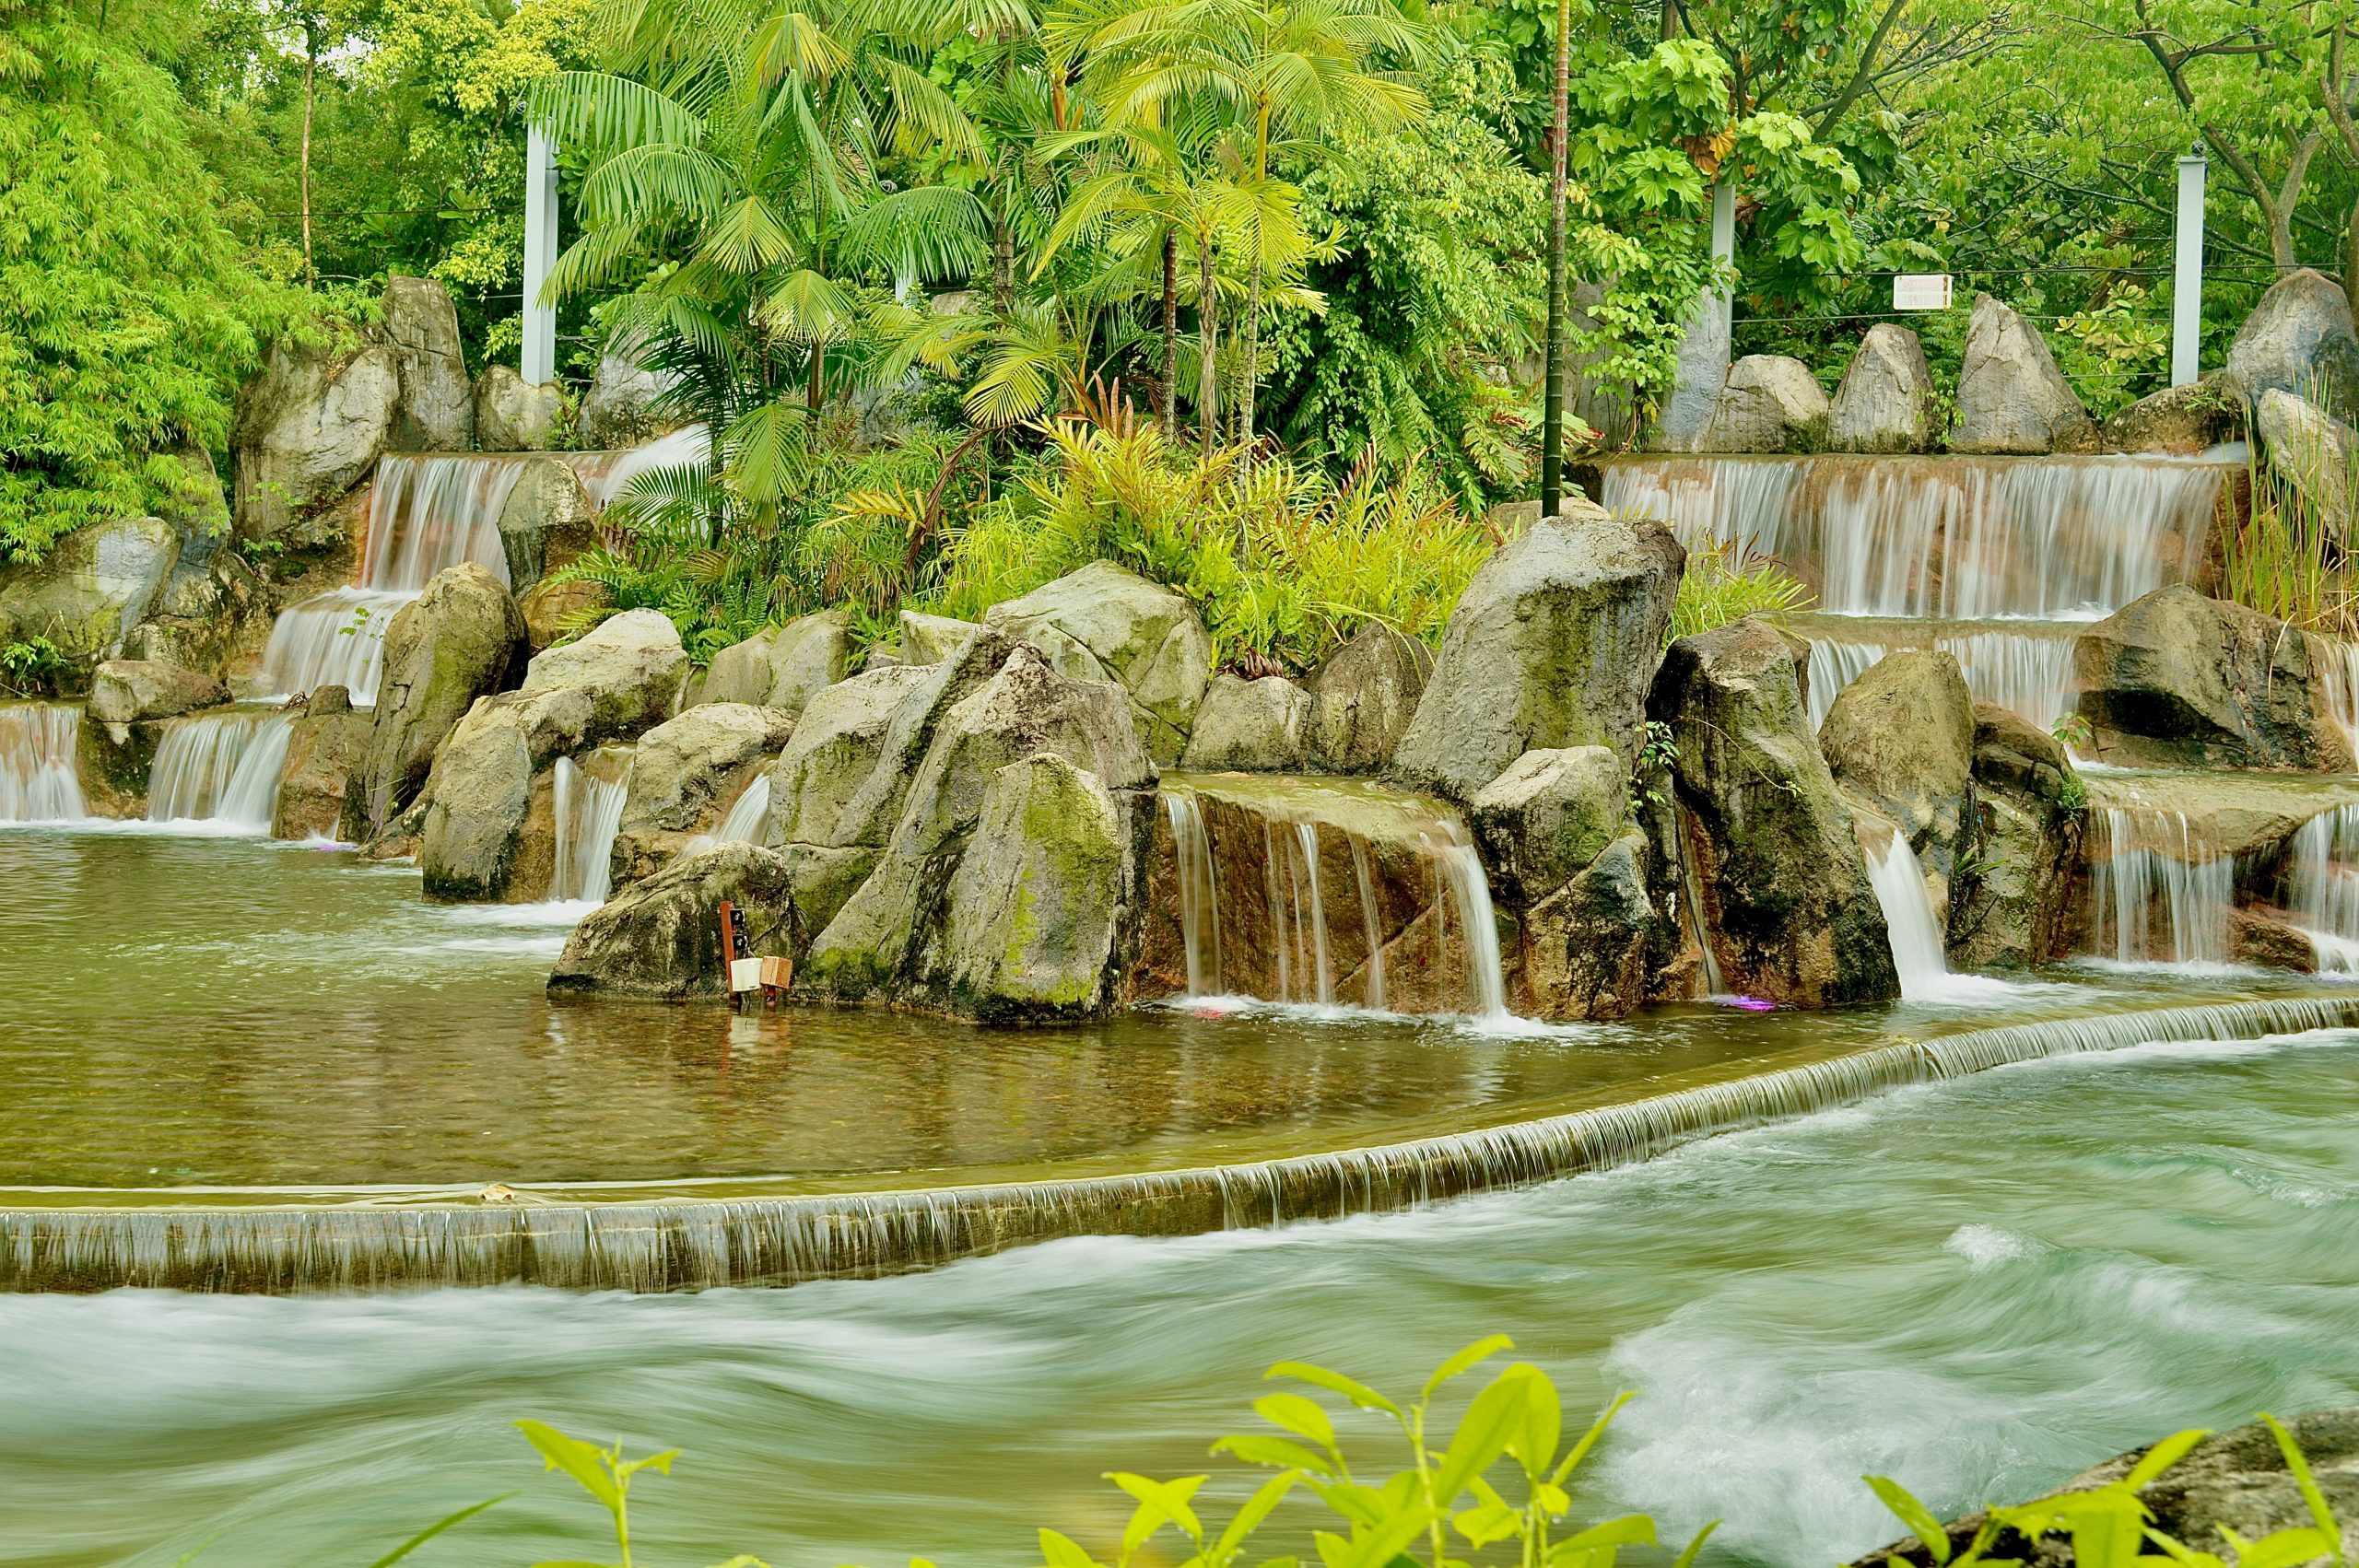 An artificial waterfall in a park